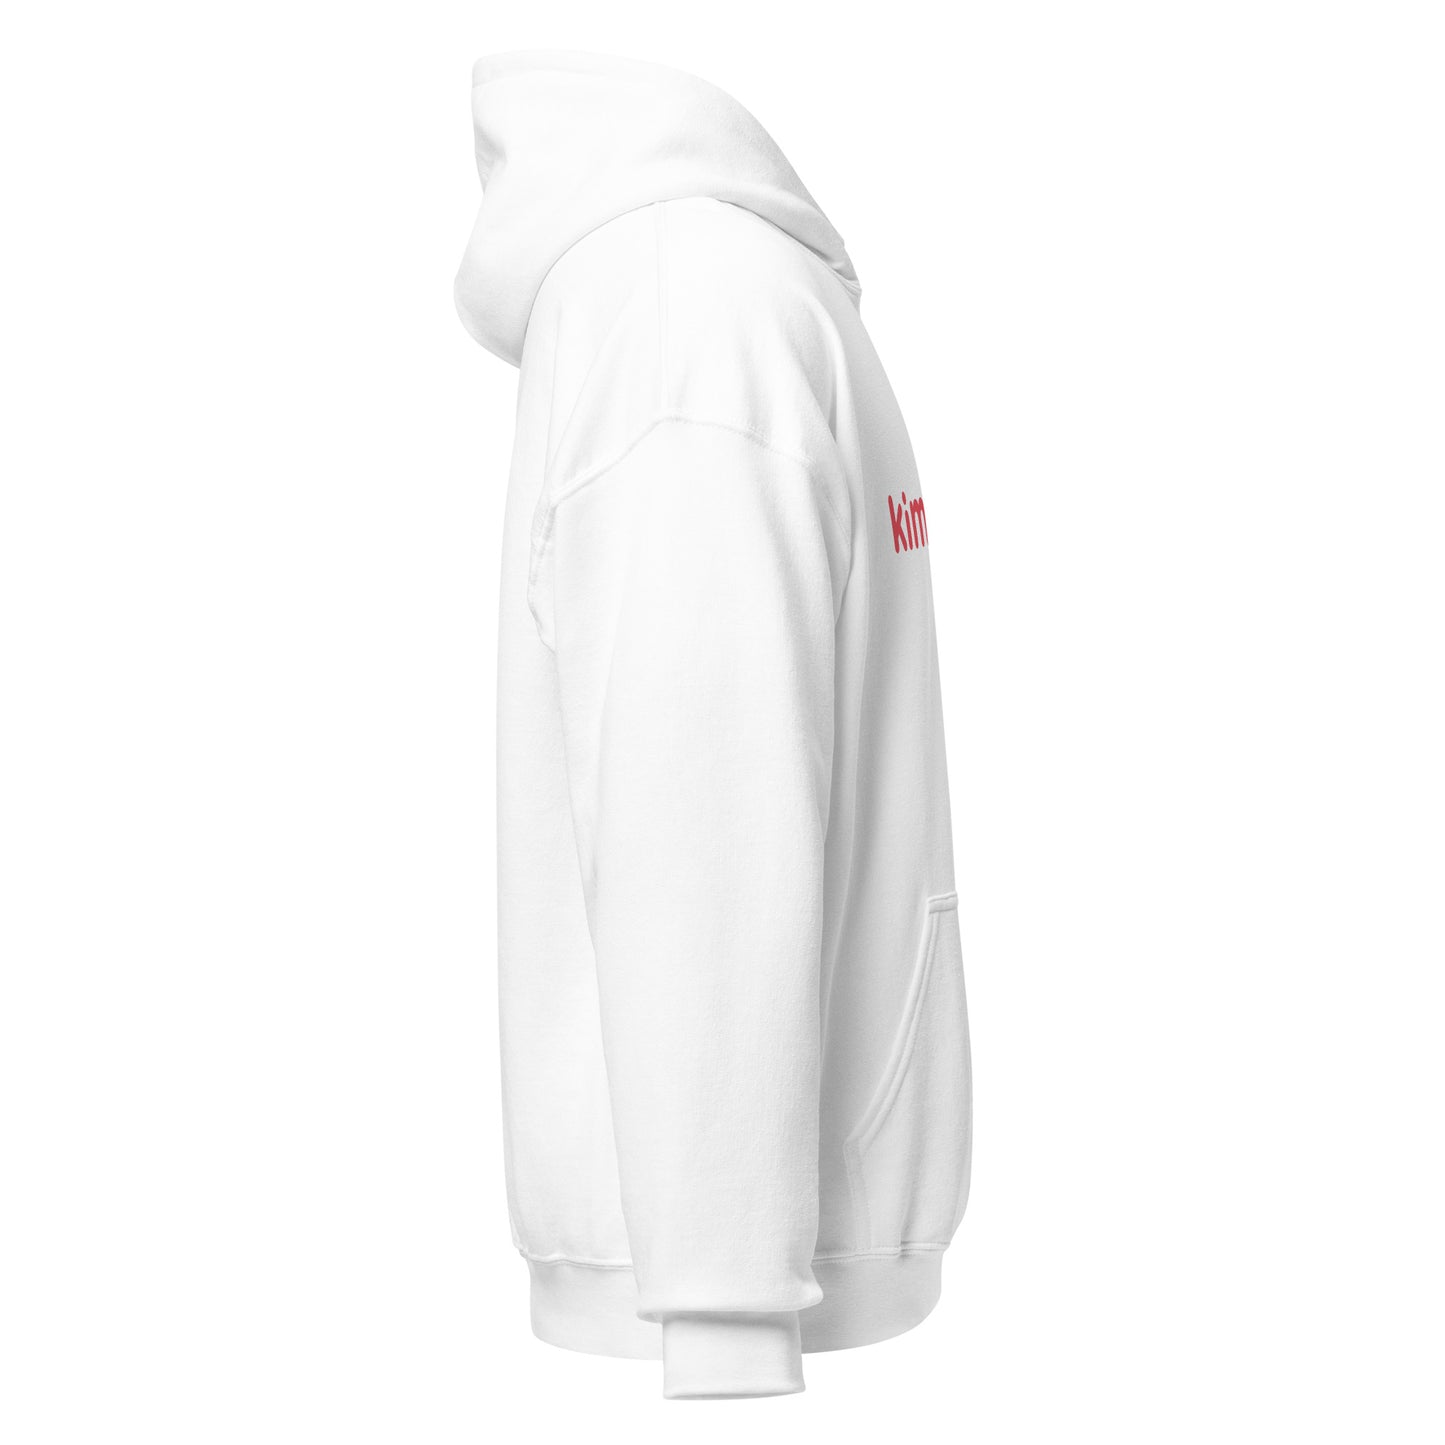 Comfort hoodie for kimonoko | unisex P